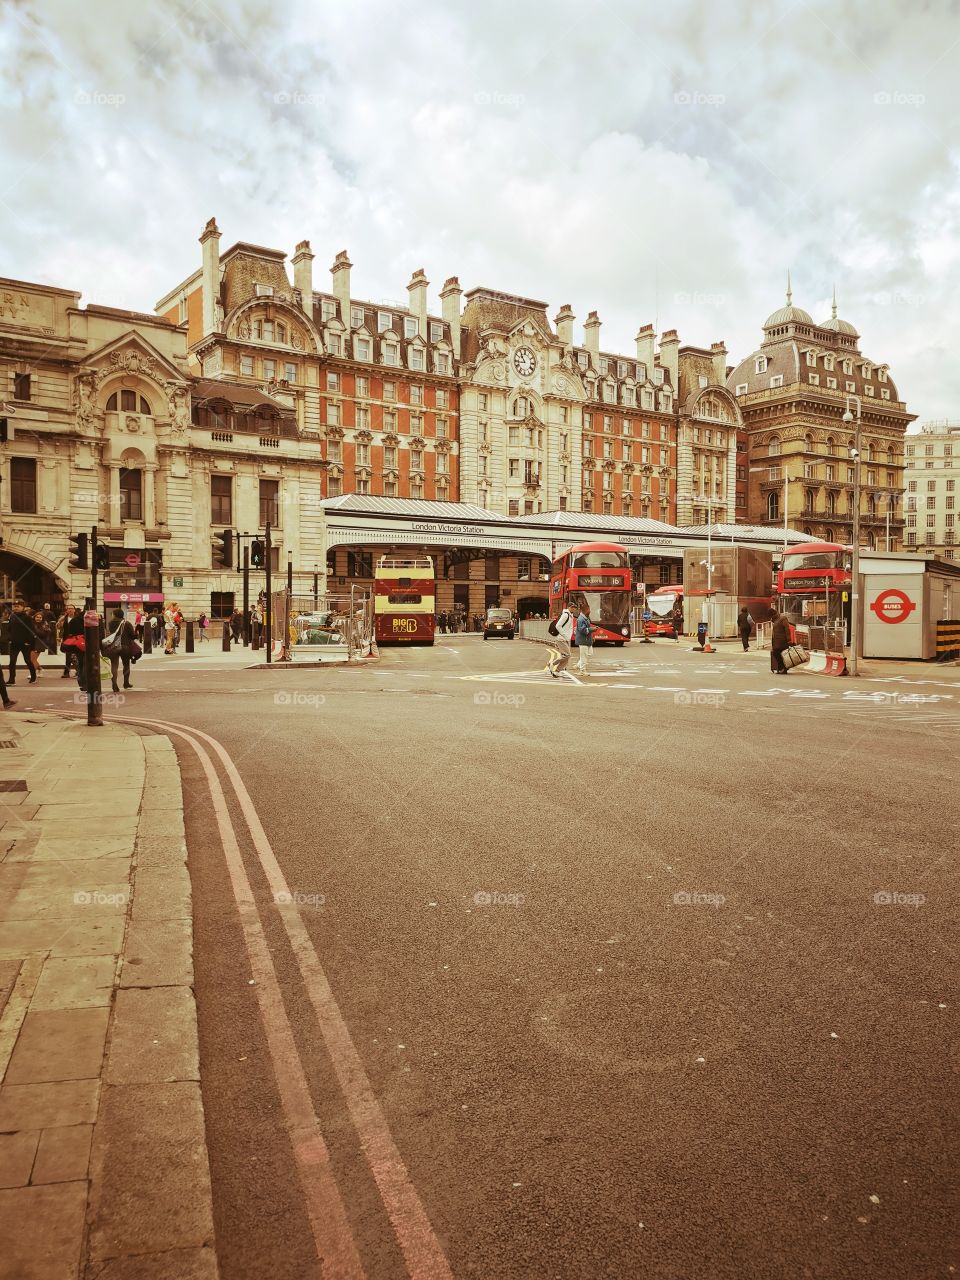 Victoria Station, London, United Kingdom